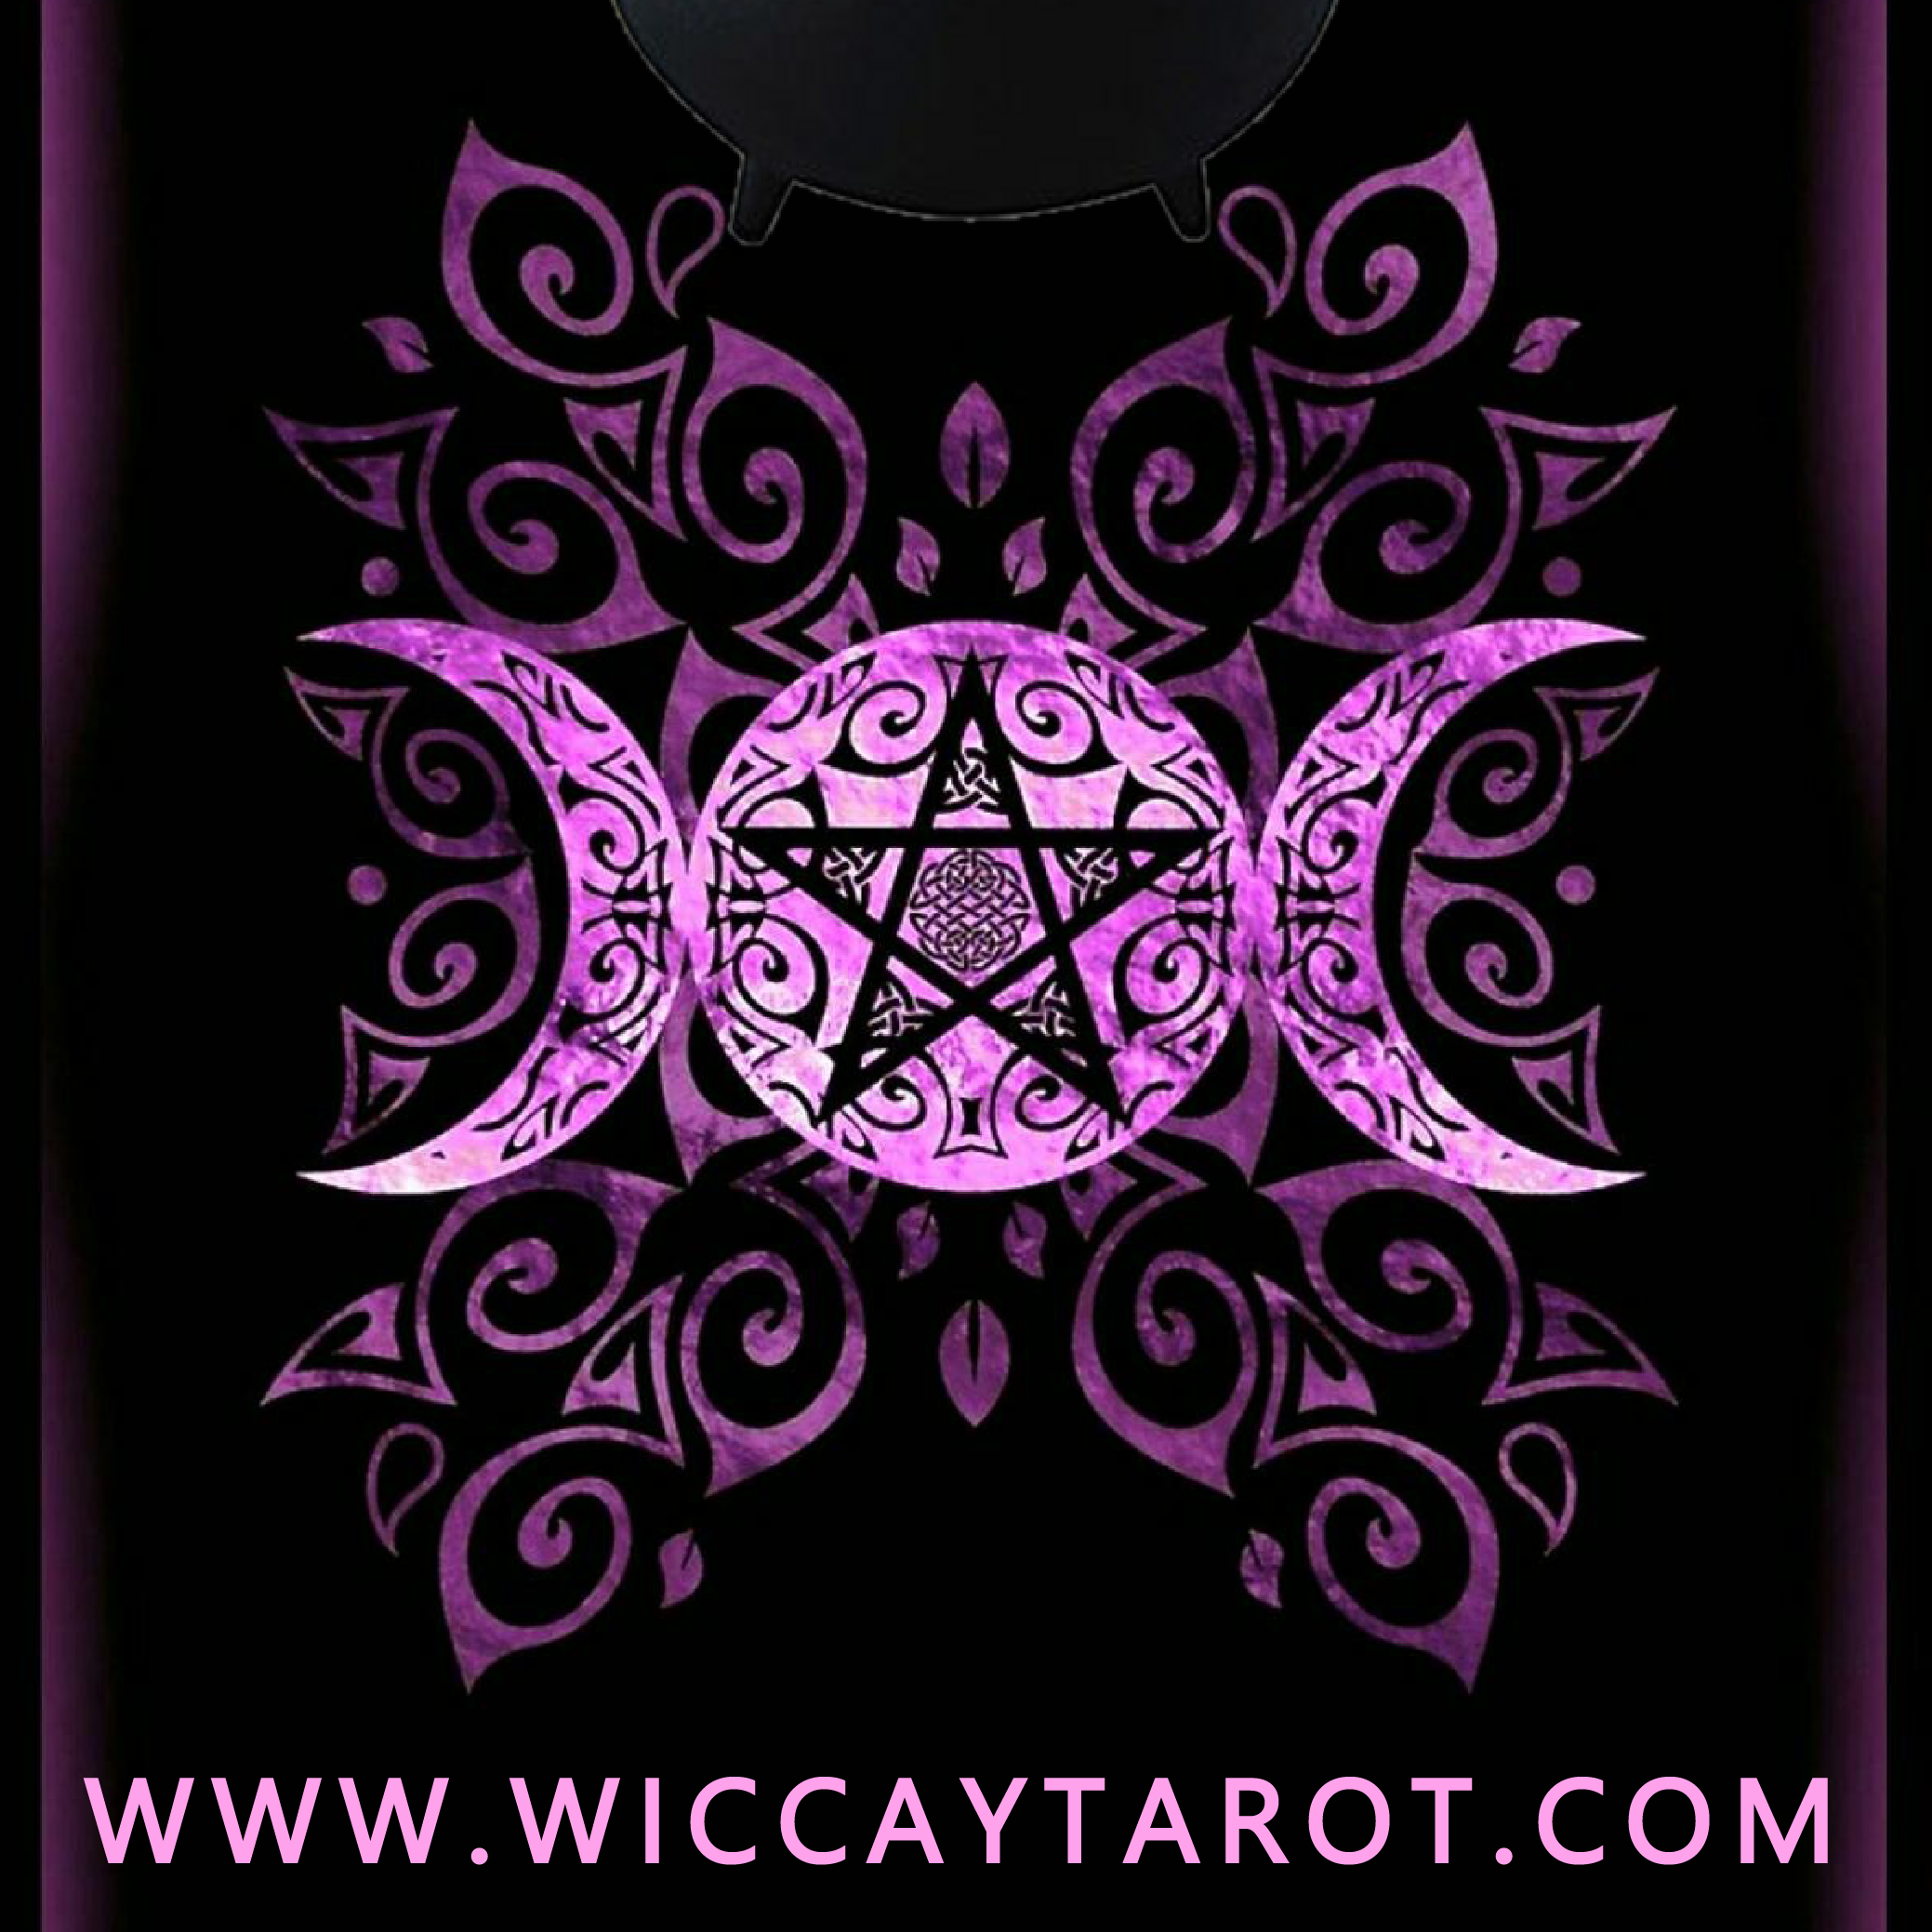 Wicca y Tarot